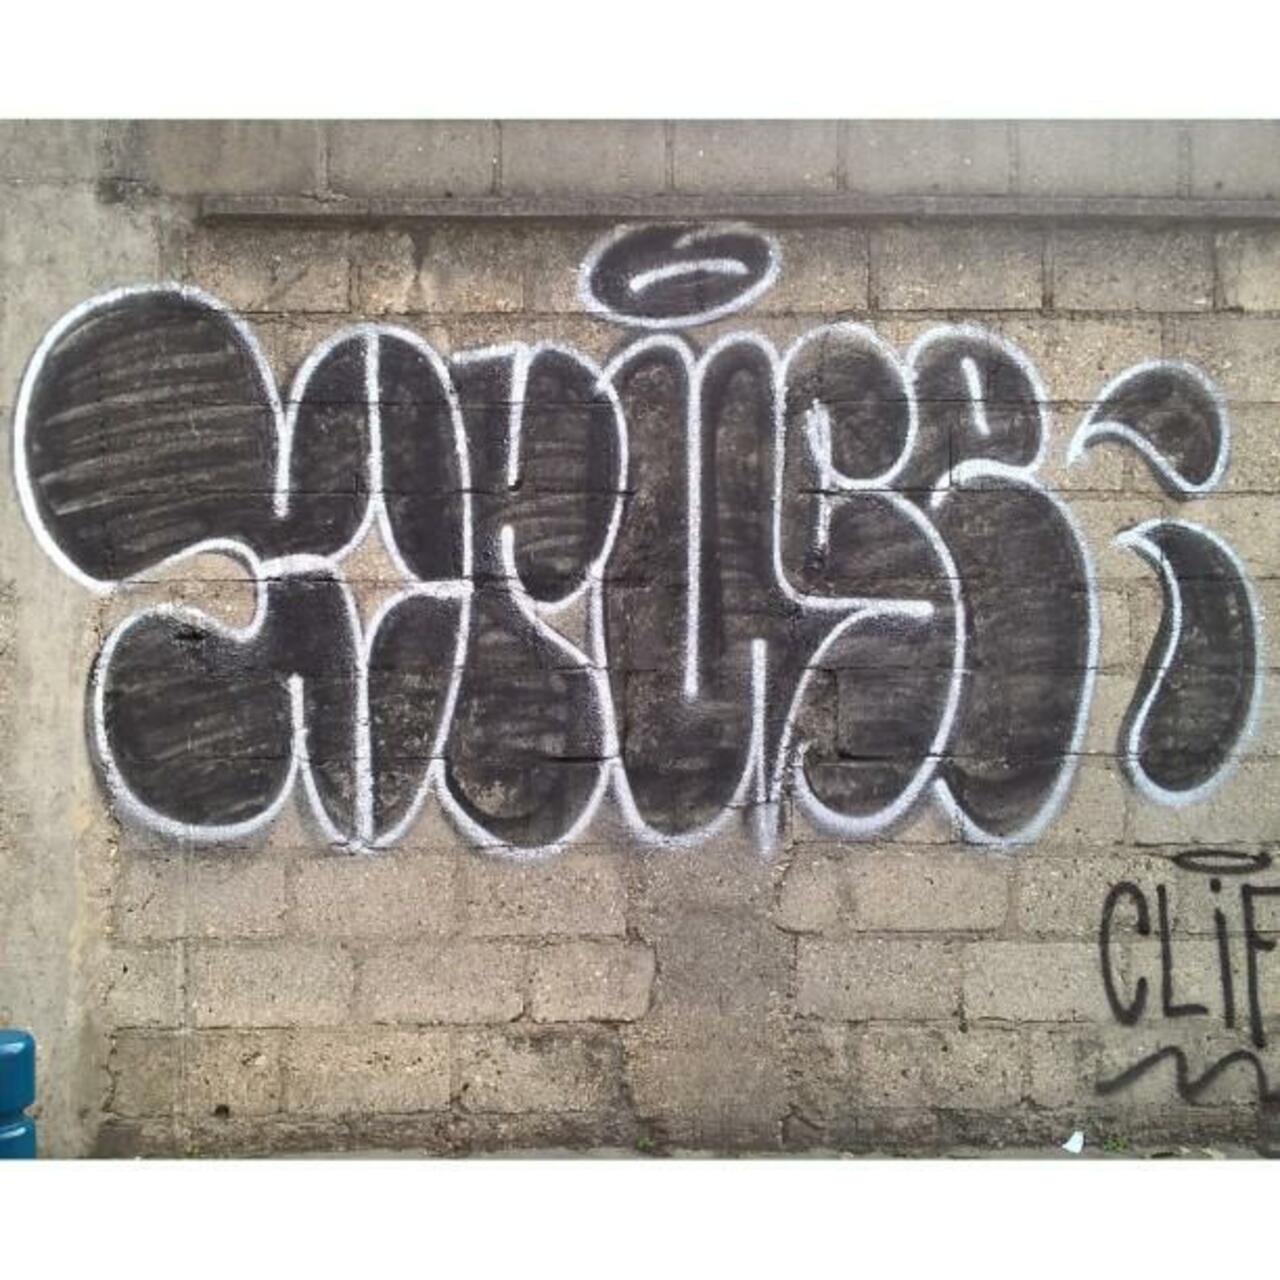 #Paris #graffiti photo by @maxdimontemarciano http://ift.tt/1GJy1rF #StreetArt http://t.co/iyuPWzMhb6